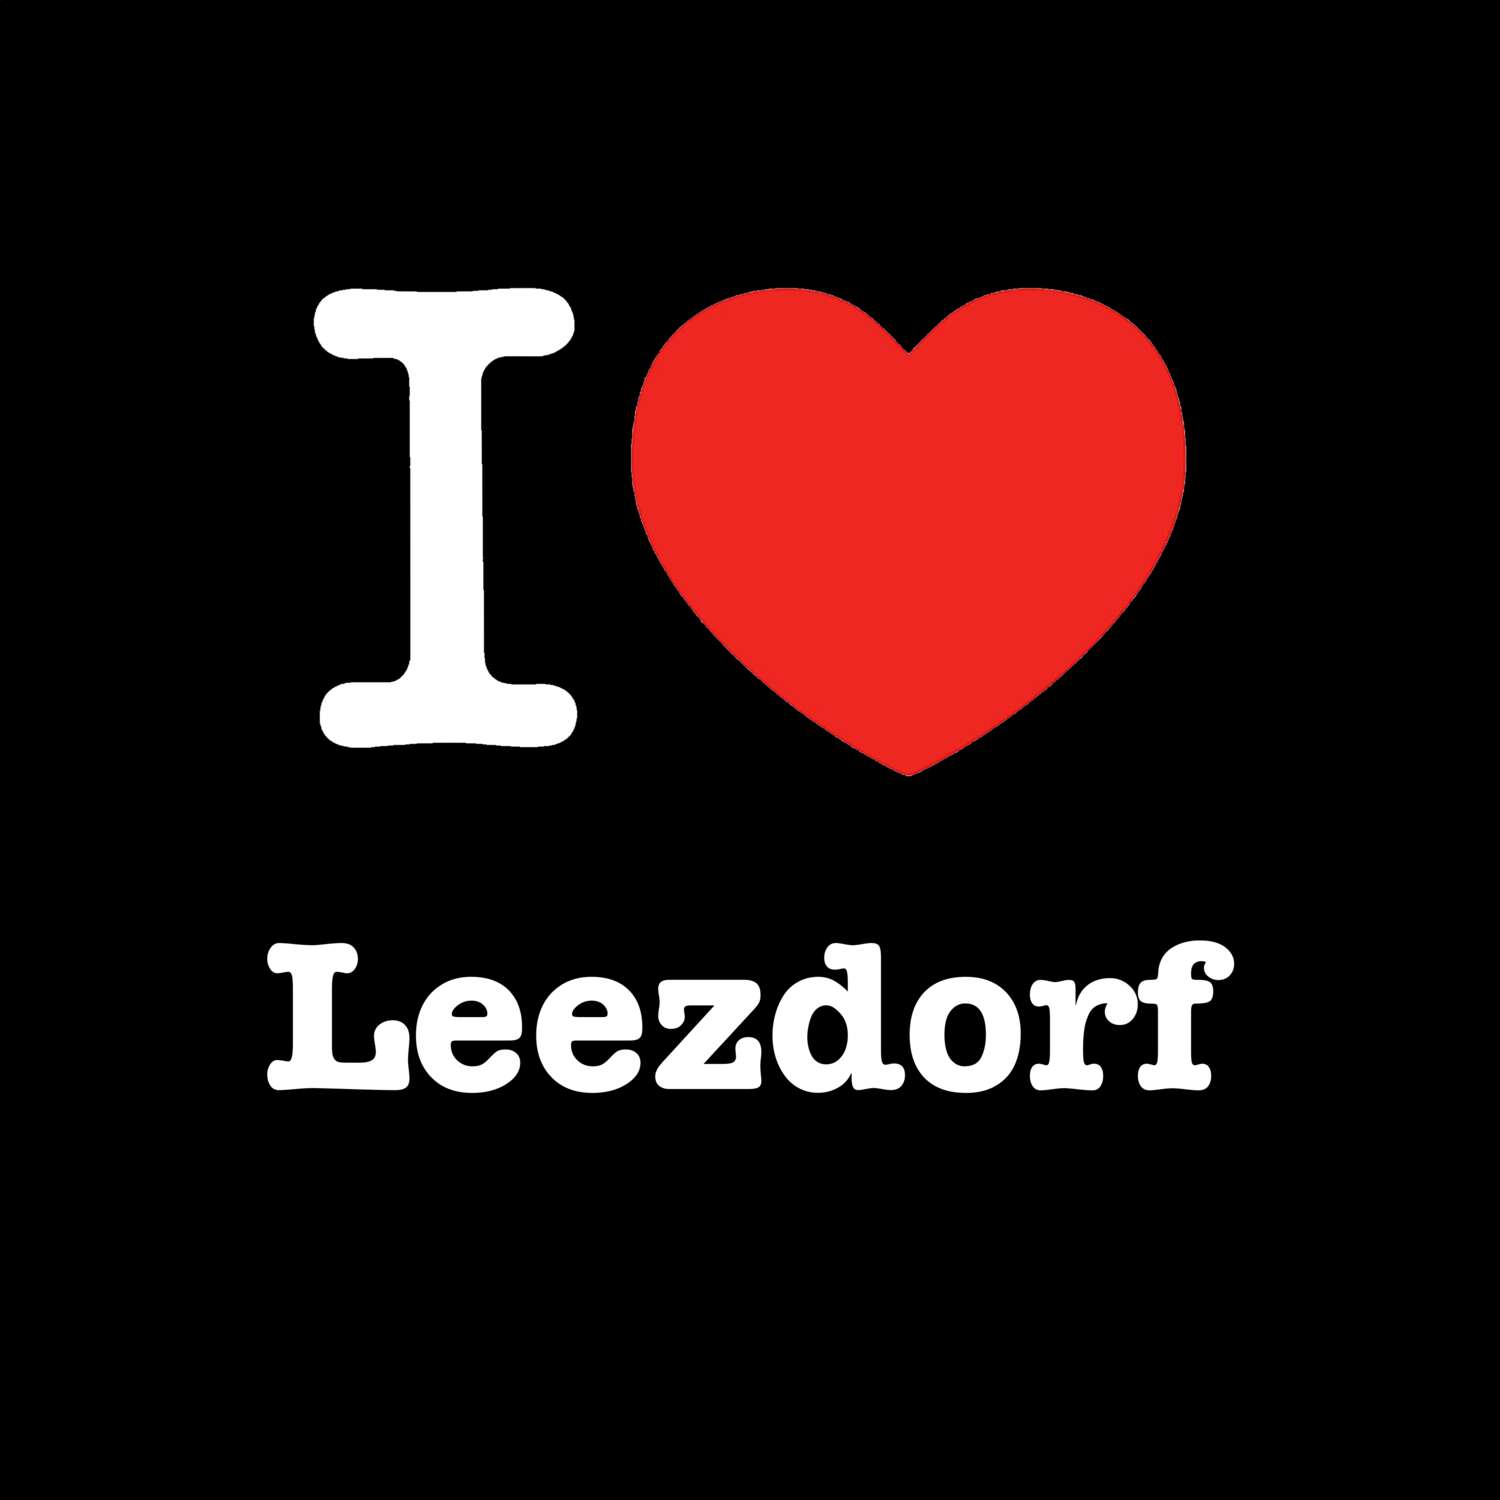 Leezdorf T-Shirt »I love«